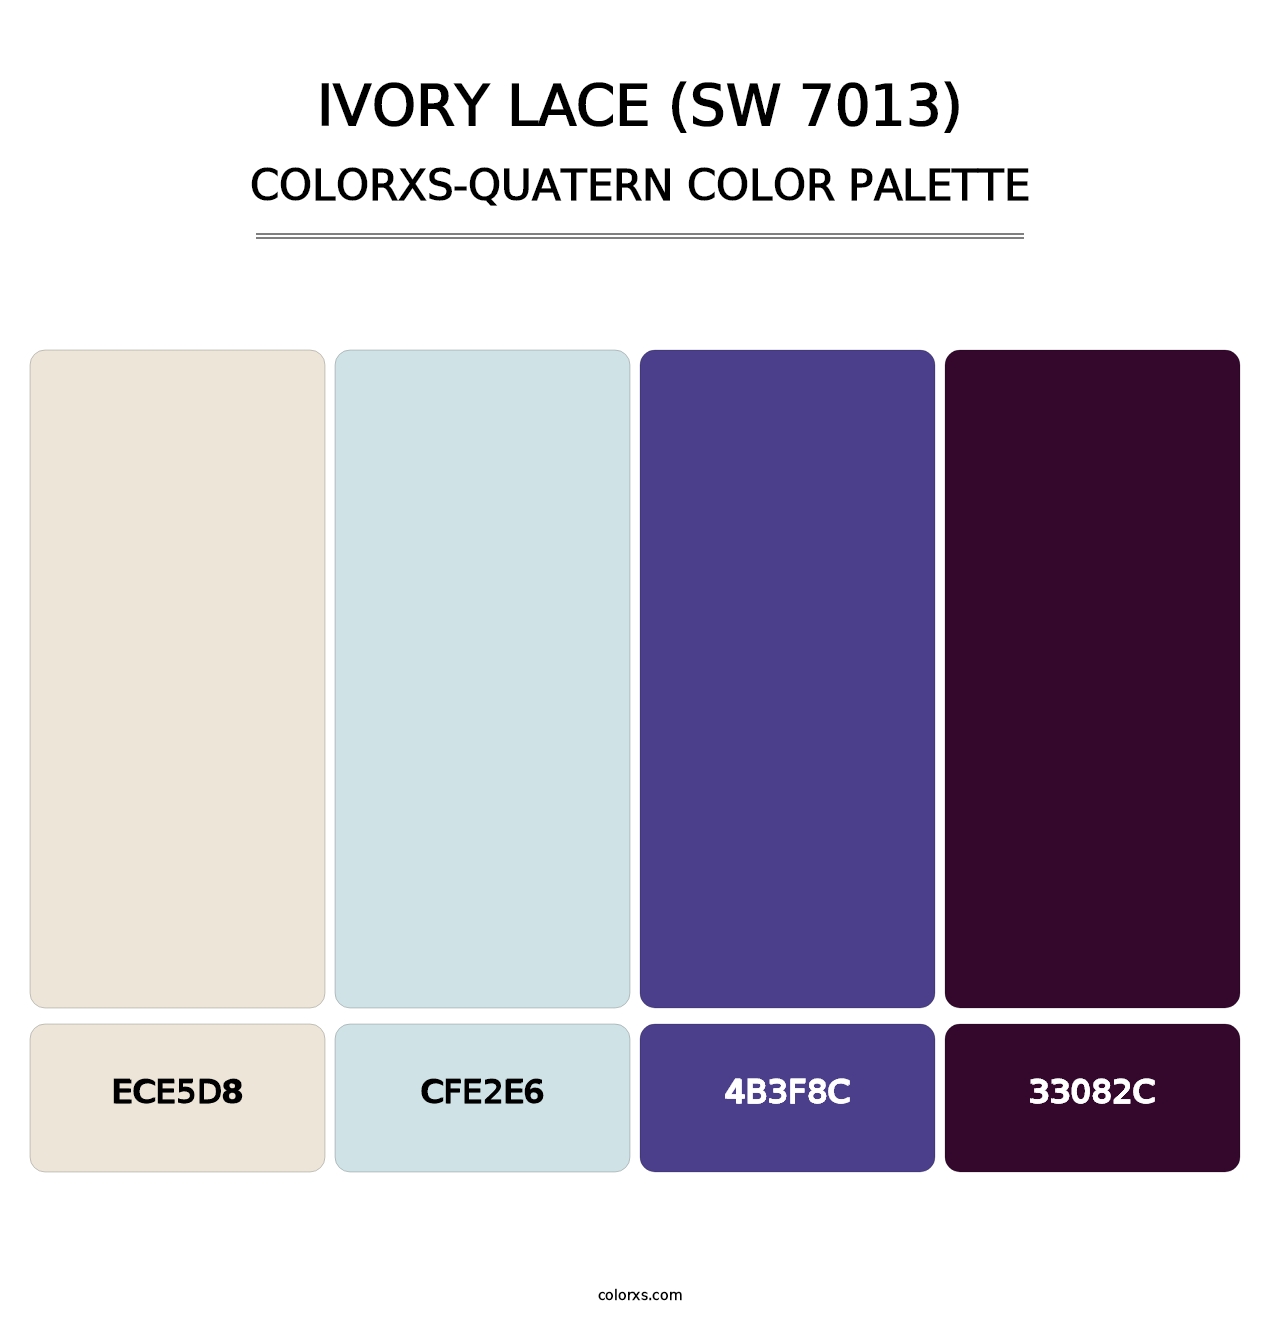 Ivory Lace (SW 7013) - Colorxs Quatern Palette